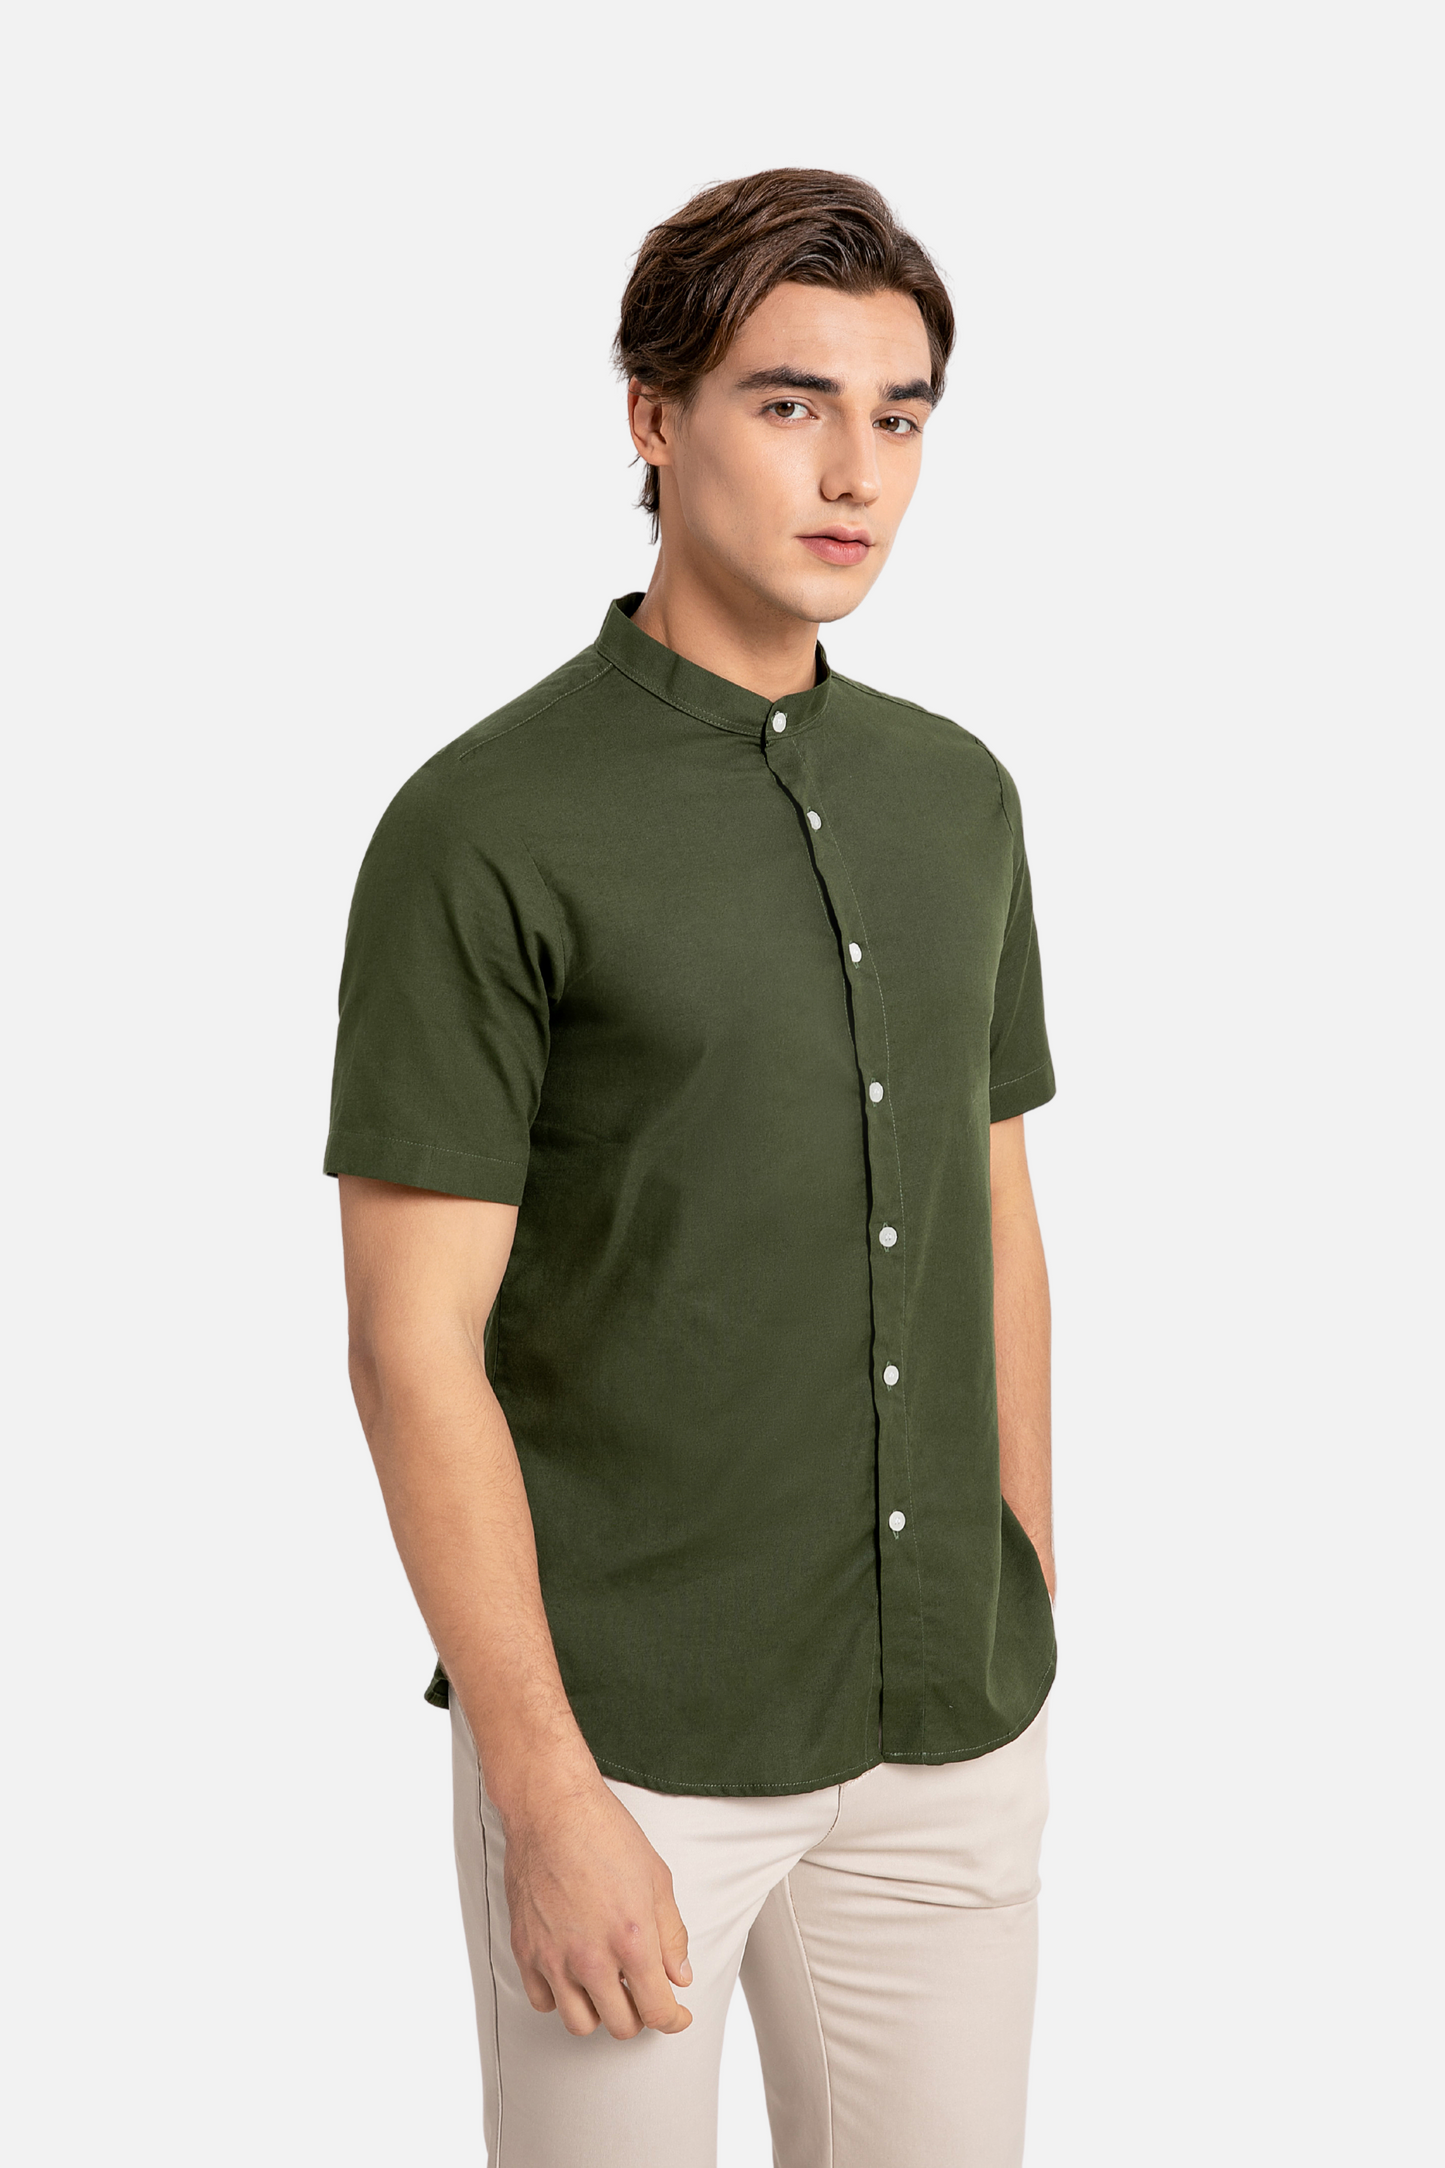 Brydan Olive Green Shirt, Short Sleeve